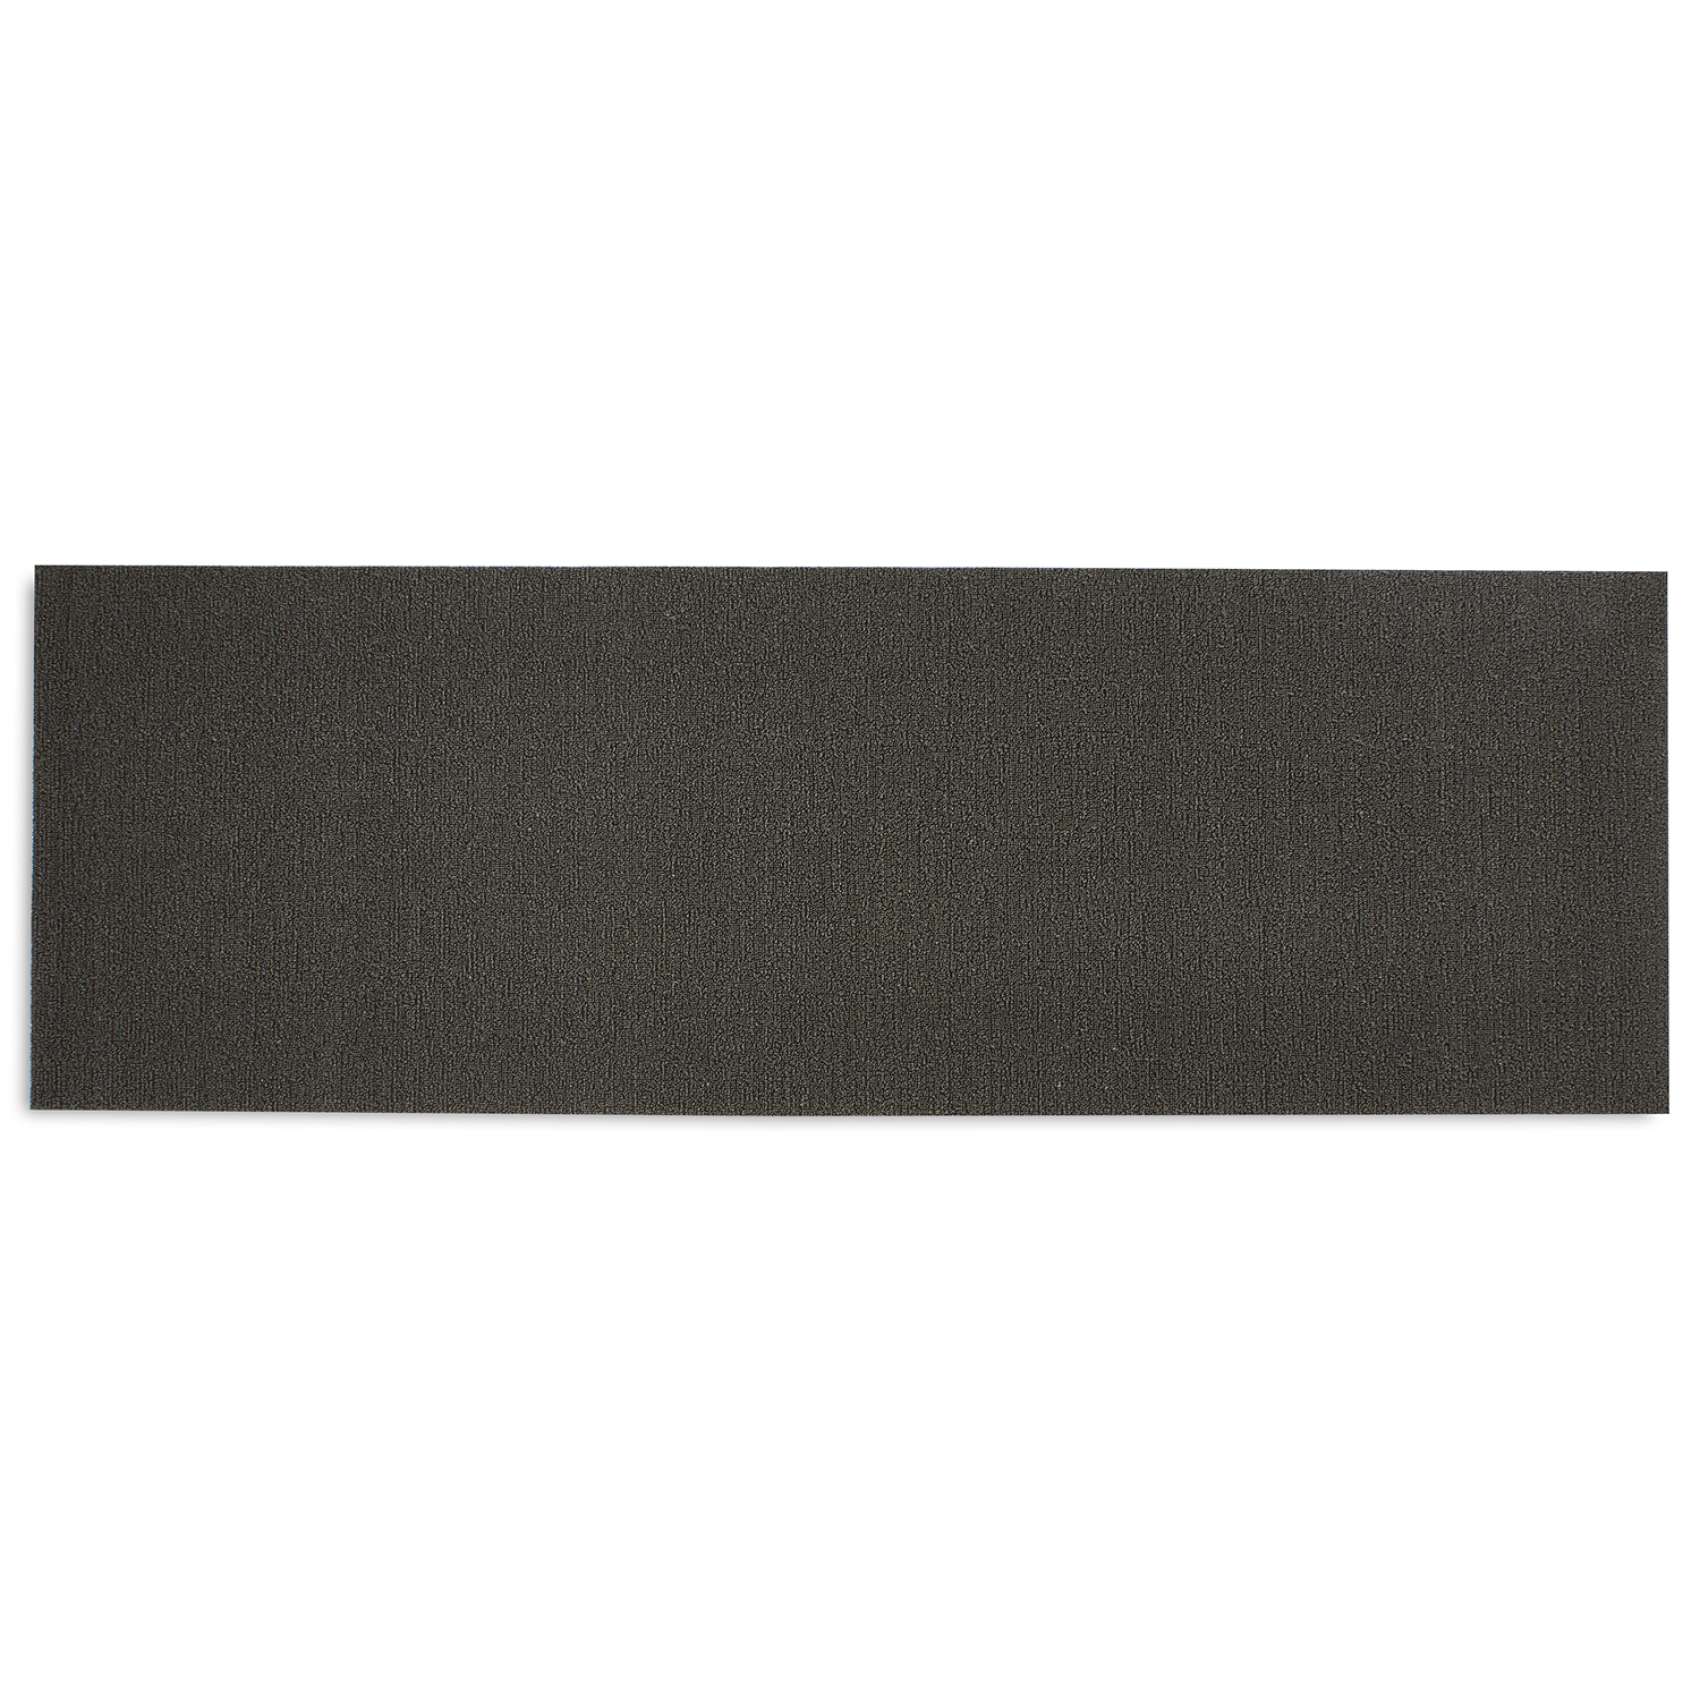 Skinny Stripe Steel Doormat